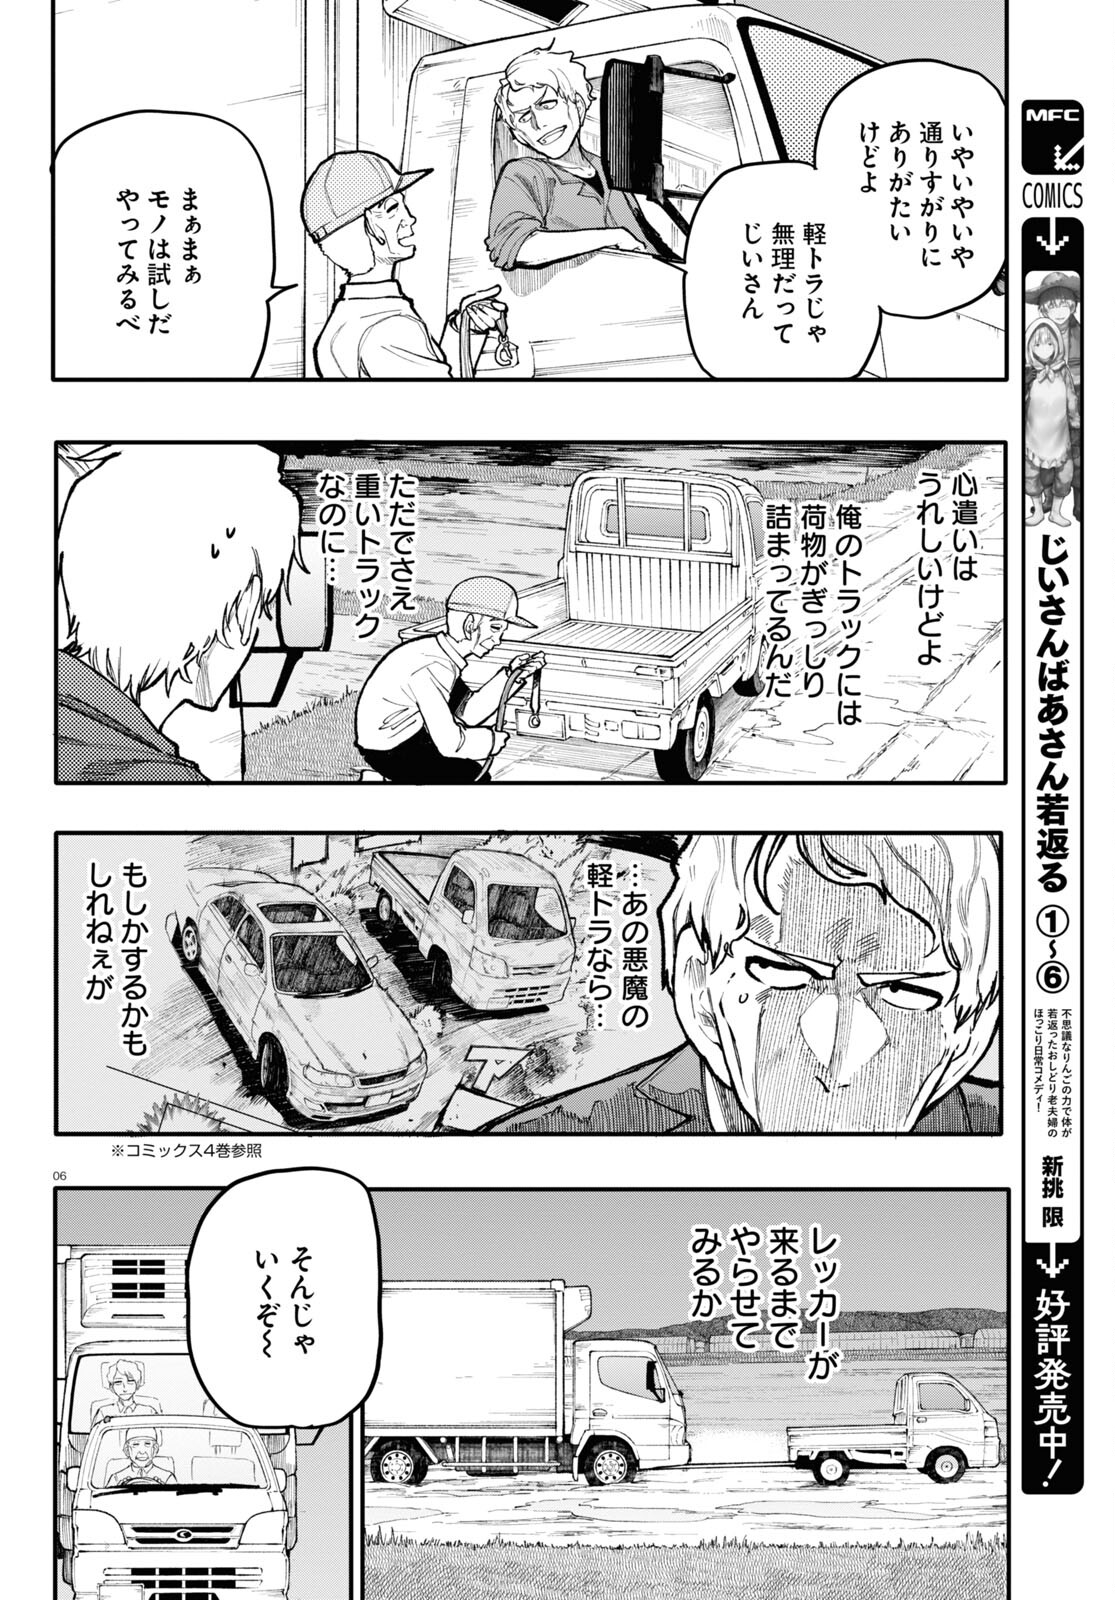 Ojii-san to Obaa-san ga Wakigaetta Hanashi - Chapter 153 - Page 2